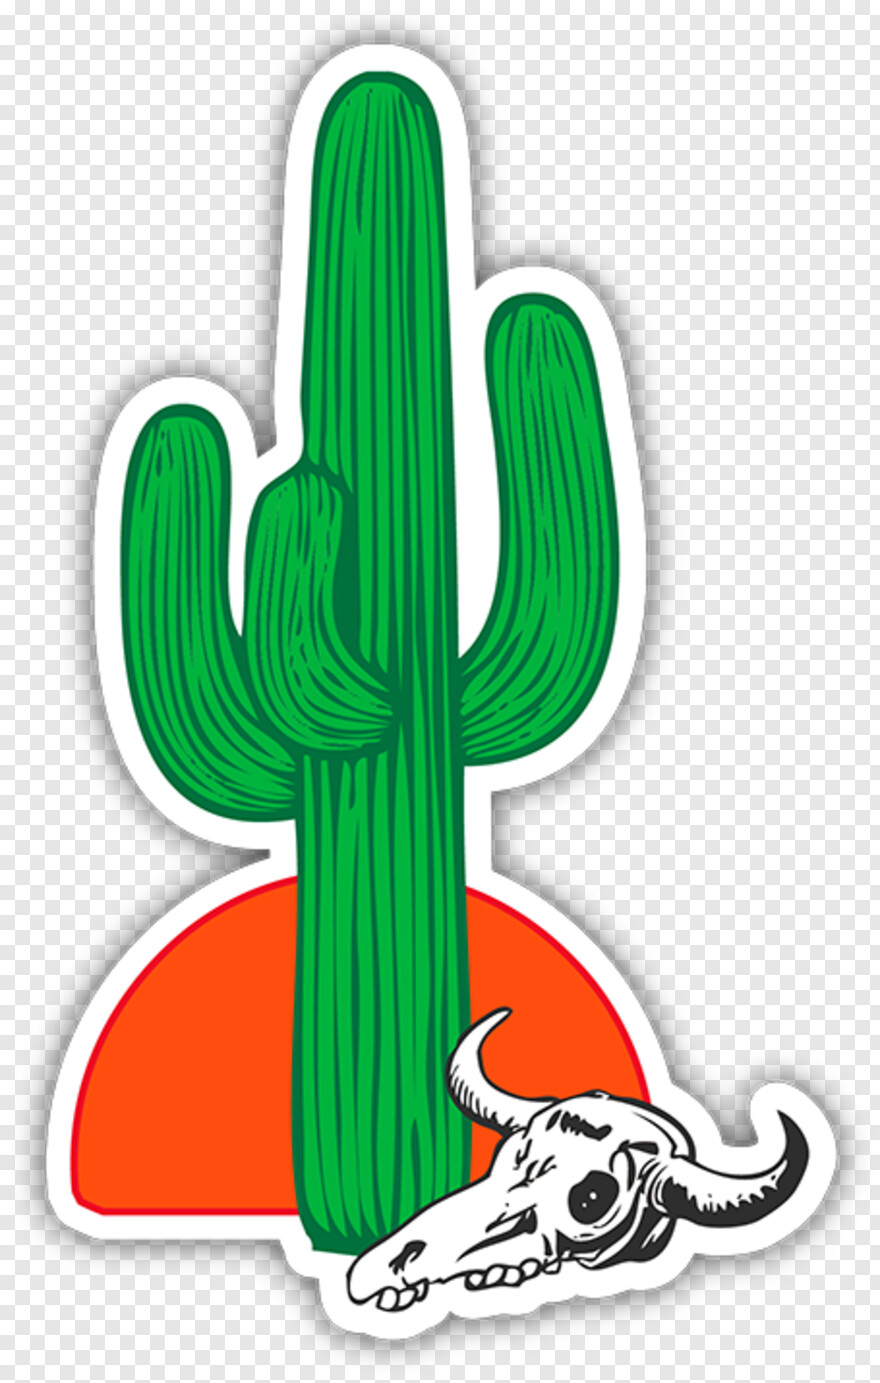 cactus-vector # 1101357